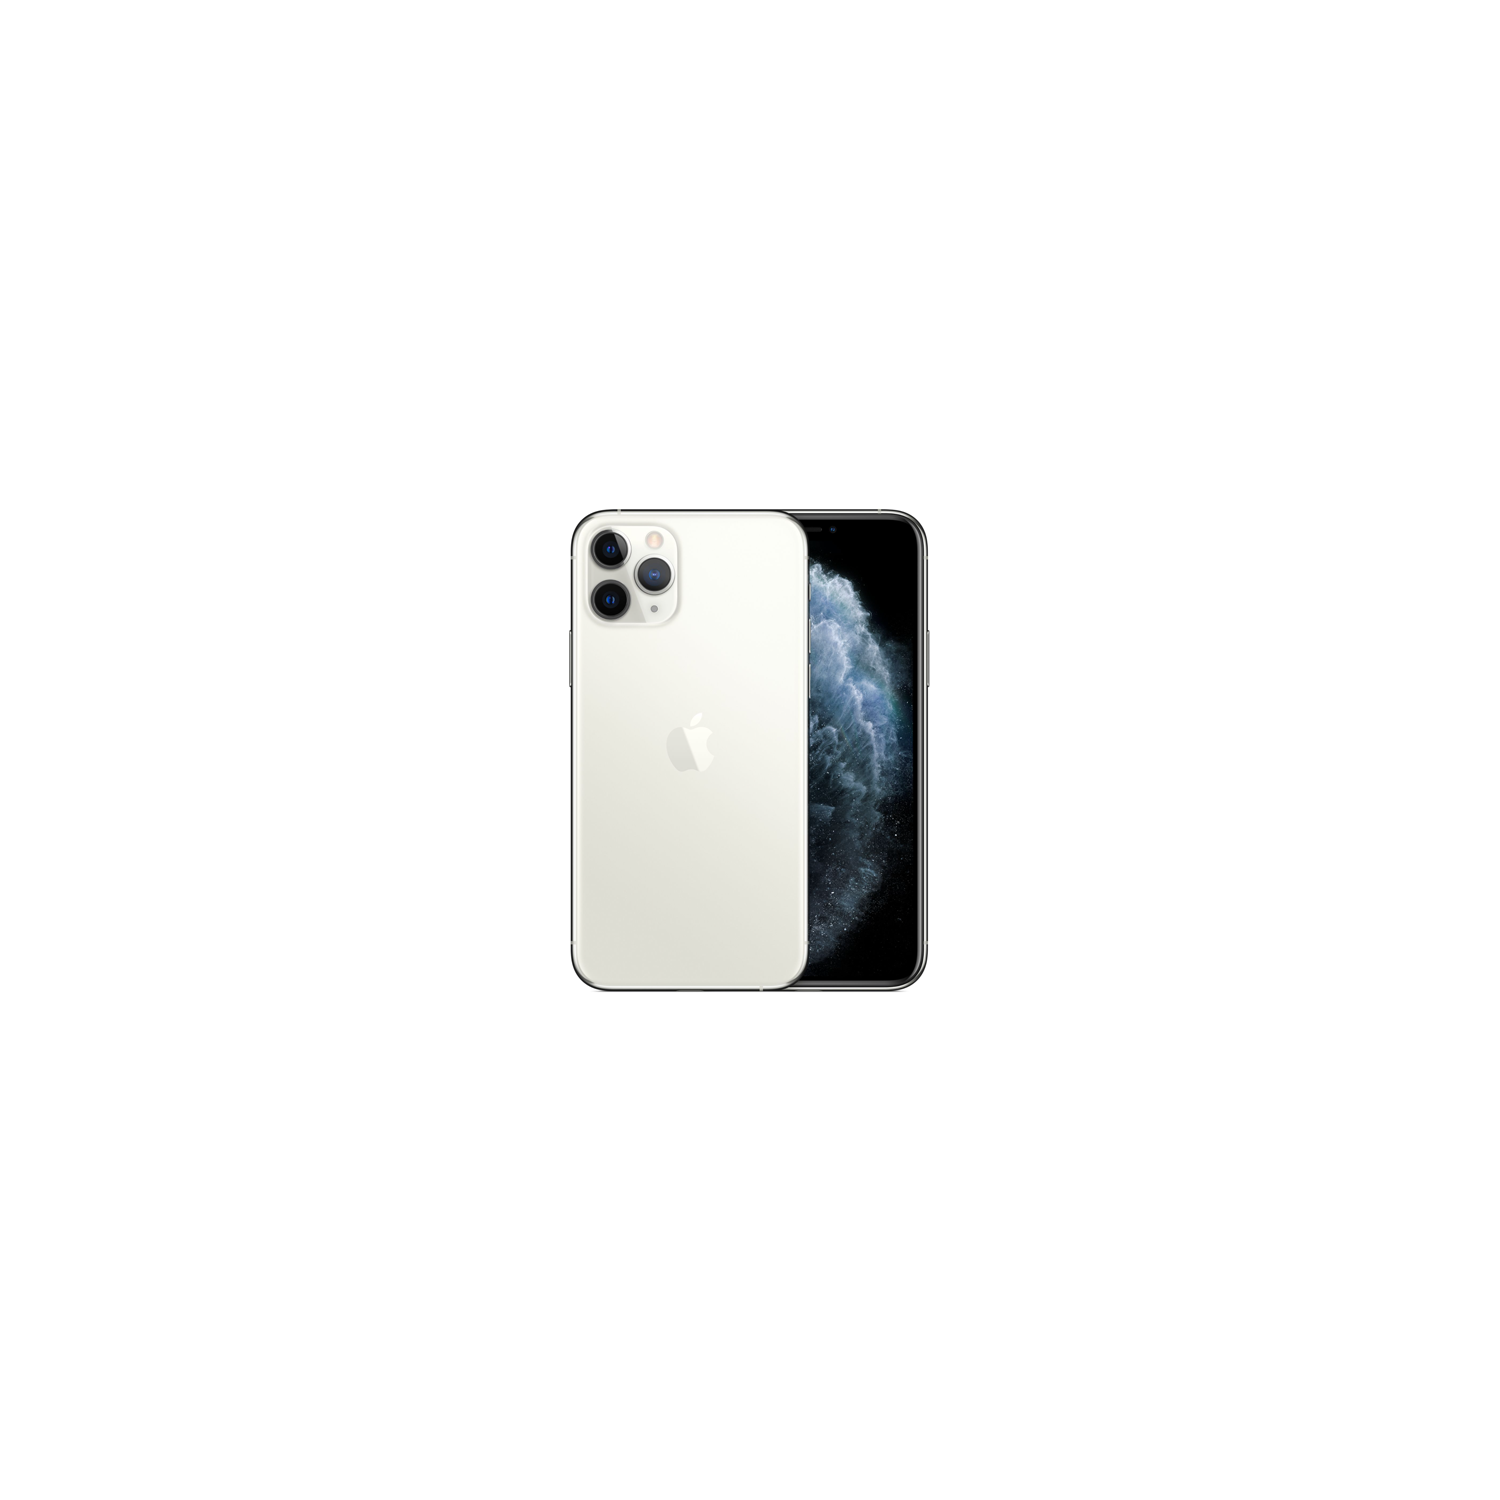 Refurbished (Good) - Apple iPhone 11 Pro Max 64GB Smartphone - Silver - Unlocked